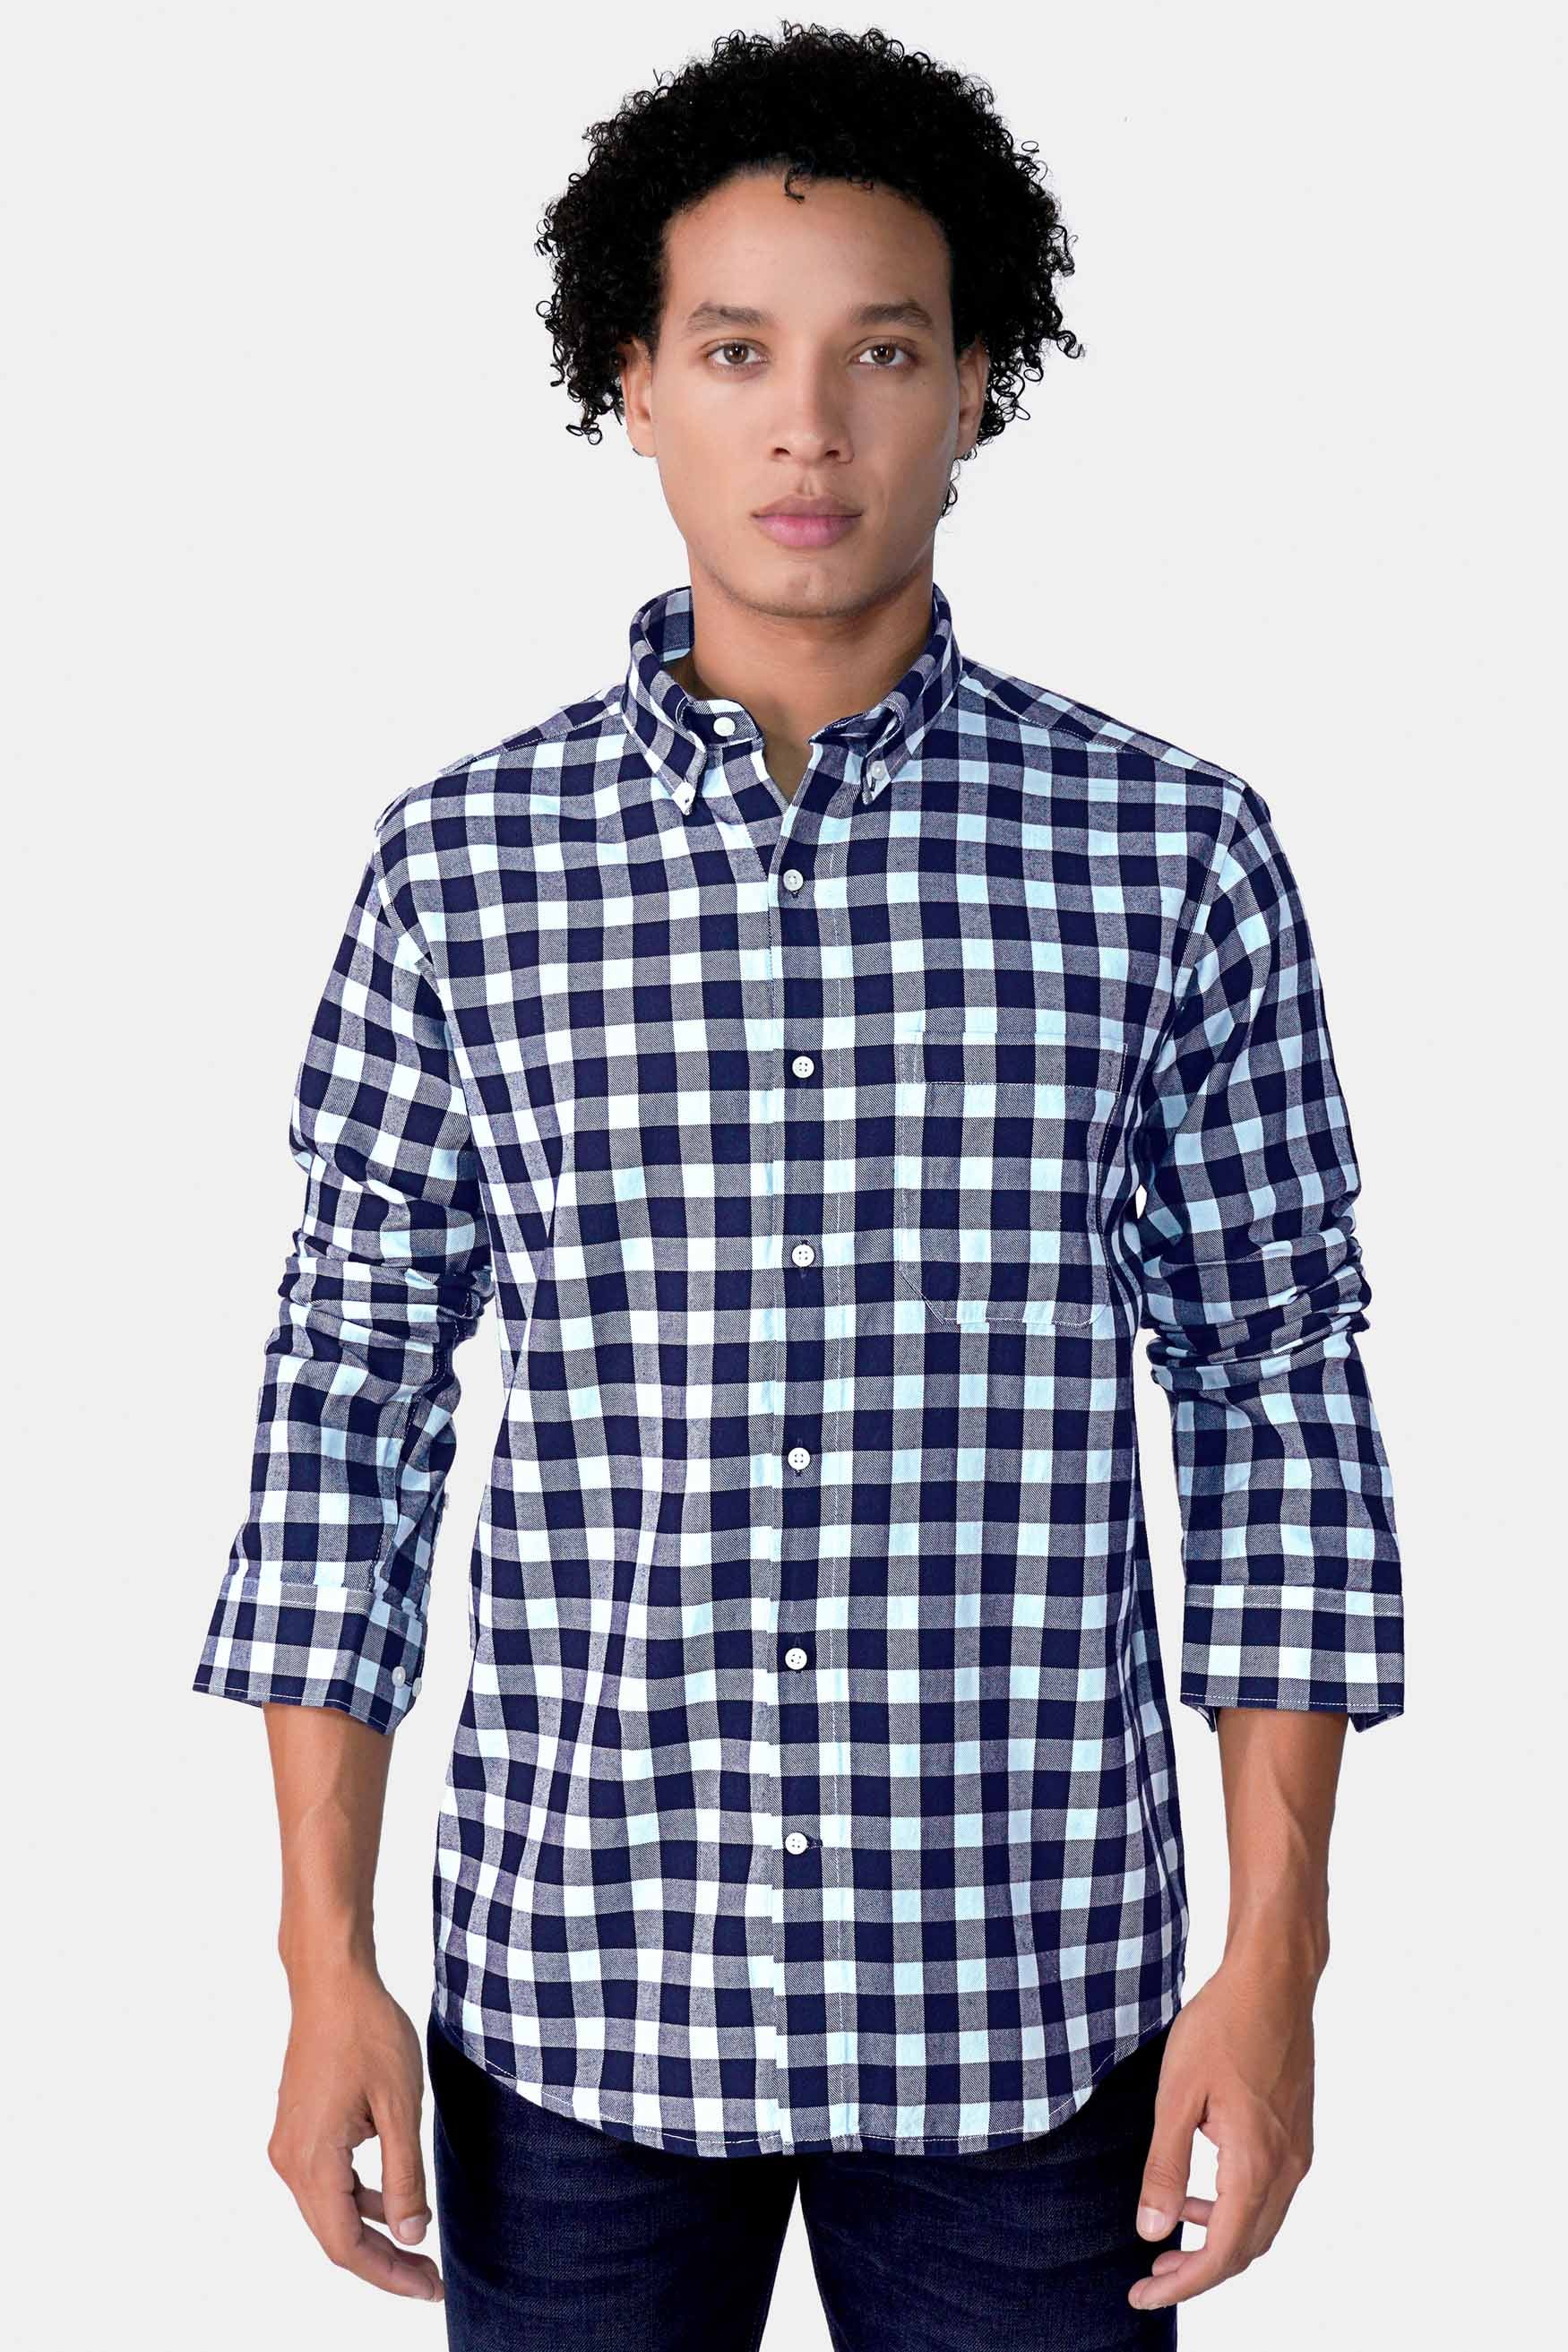 Cinder and Platinum Blue Gingham Checkered Flannel Button Down Shirt